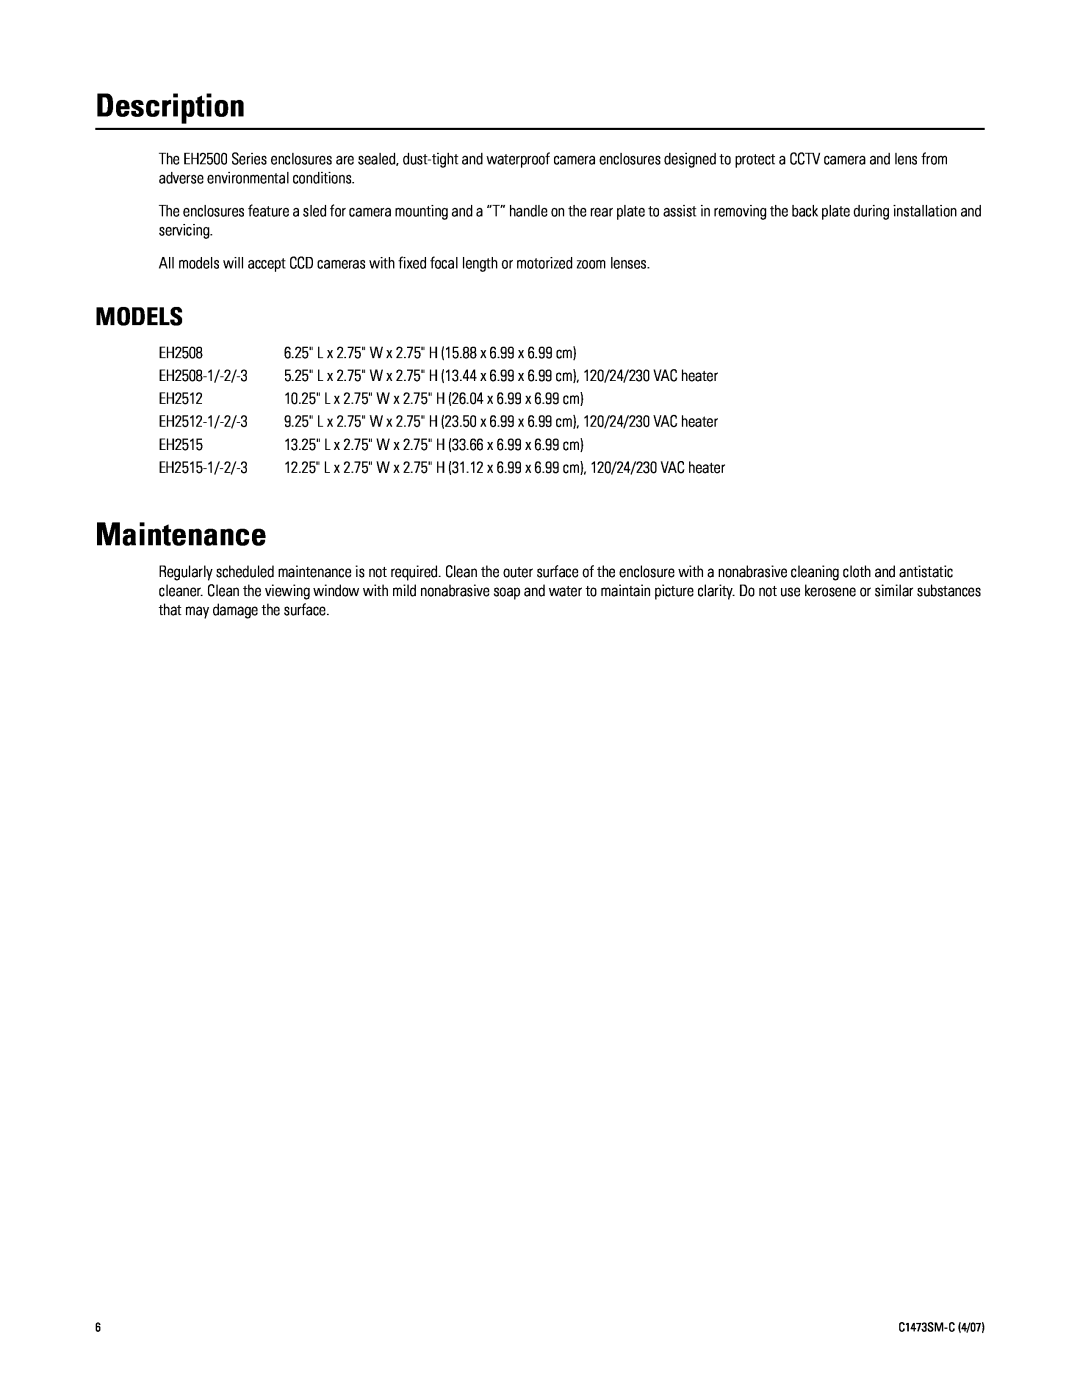 Pelco EH2500 manual Description, Maintenance, Models 